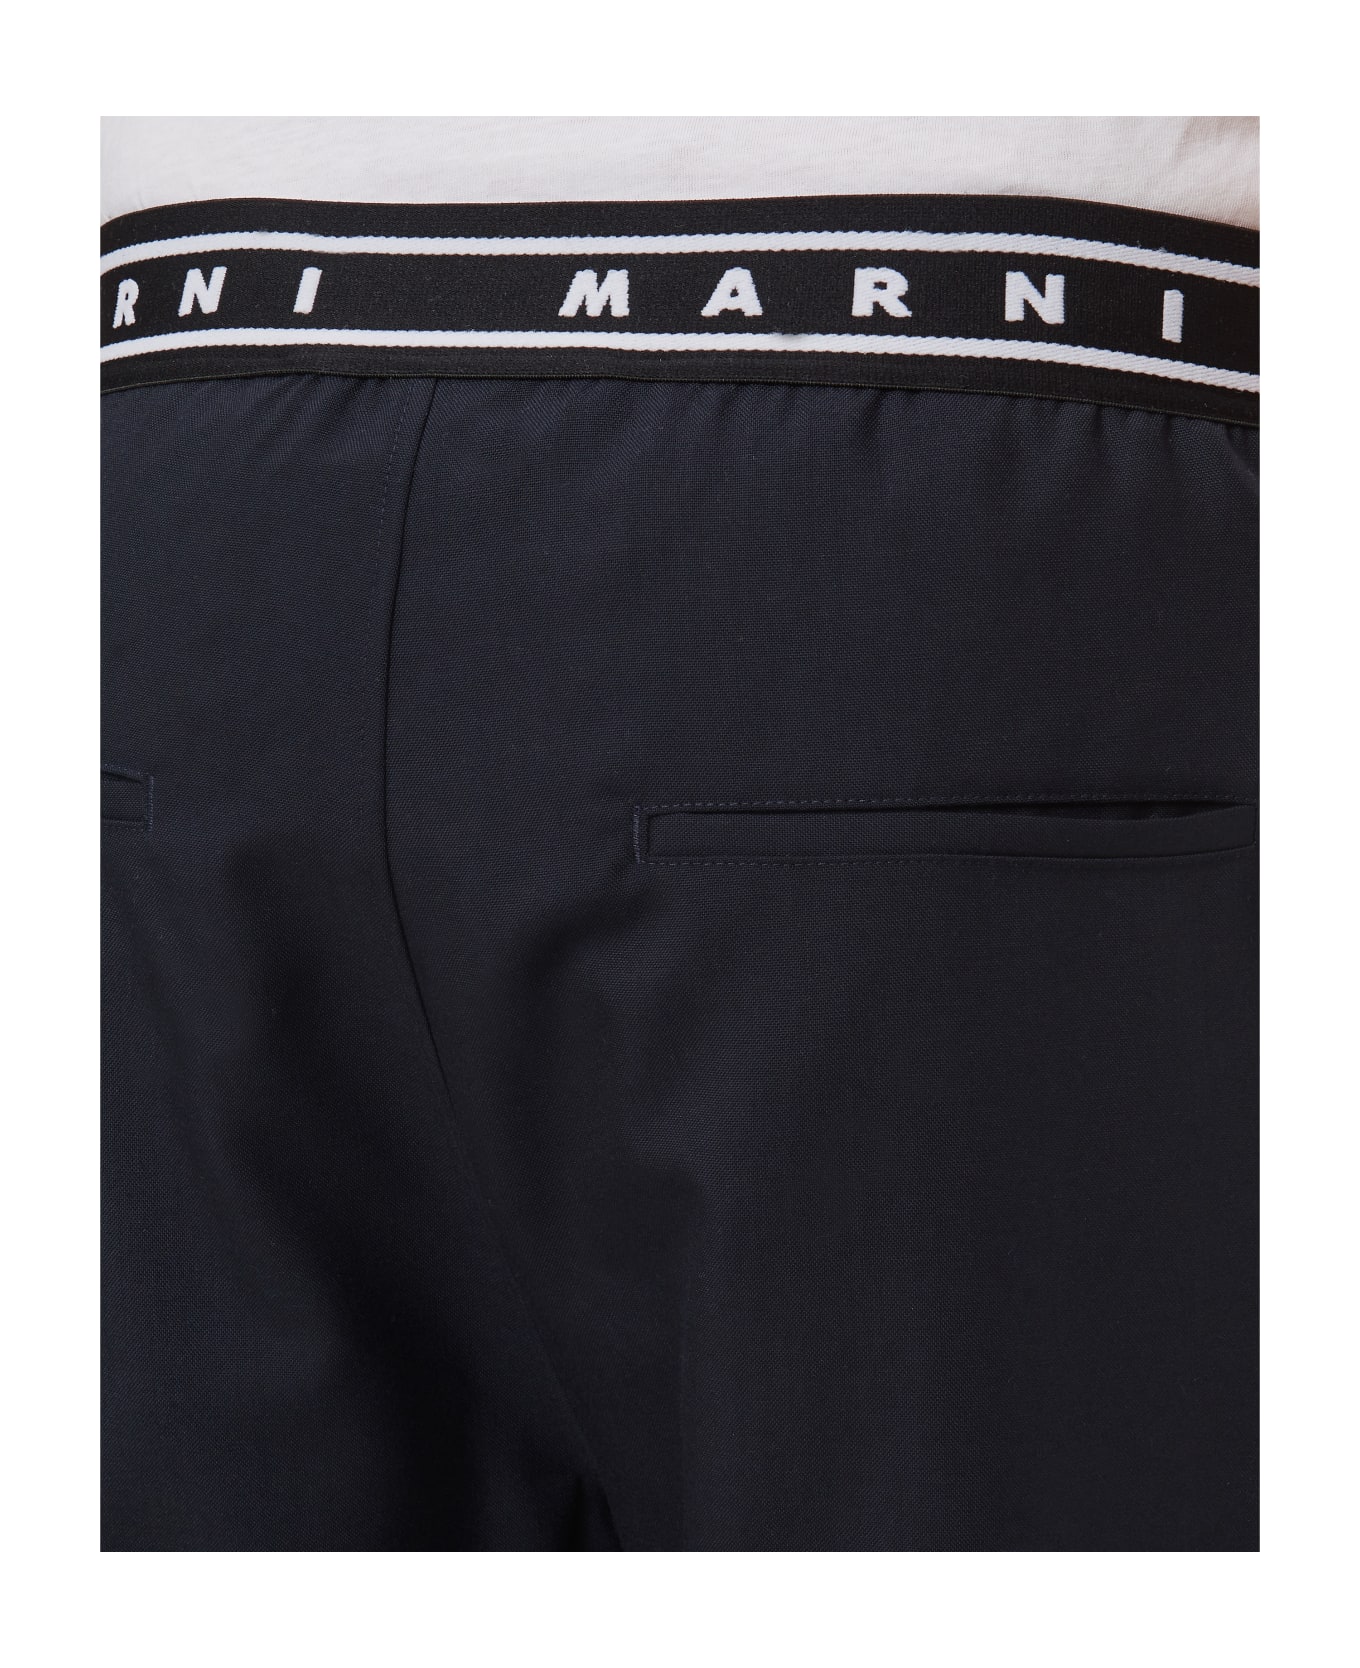 Marni Trousers With Marni Logo Waistband - Blue シャツ